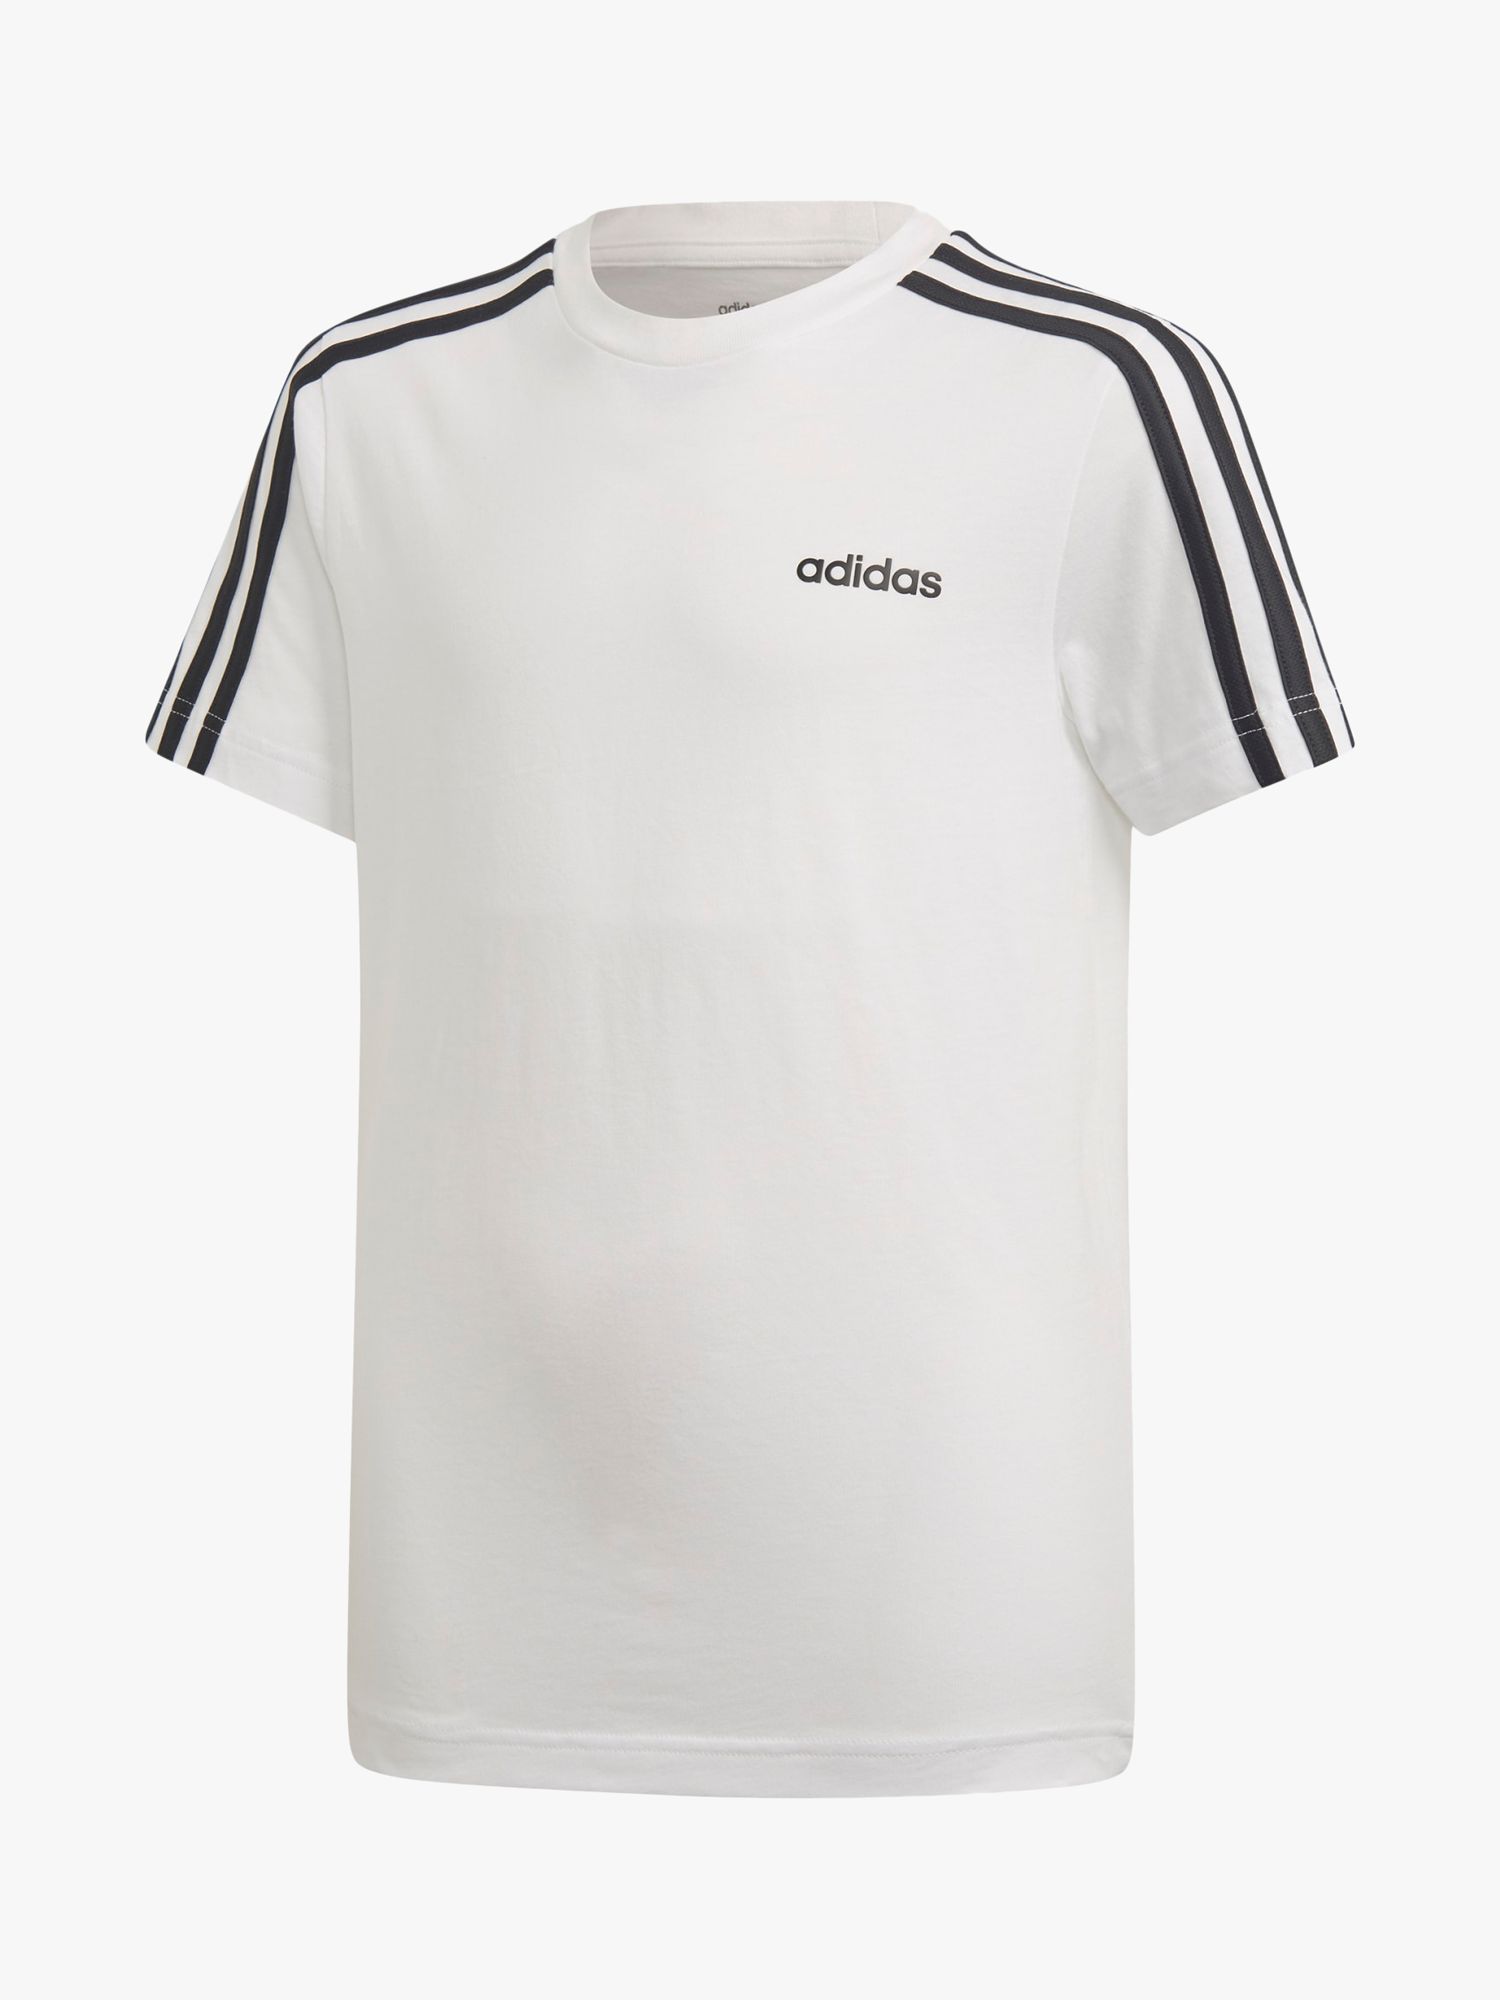 Image of adidas Boys Classic Short Sleeve TShirt White